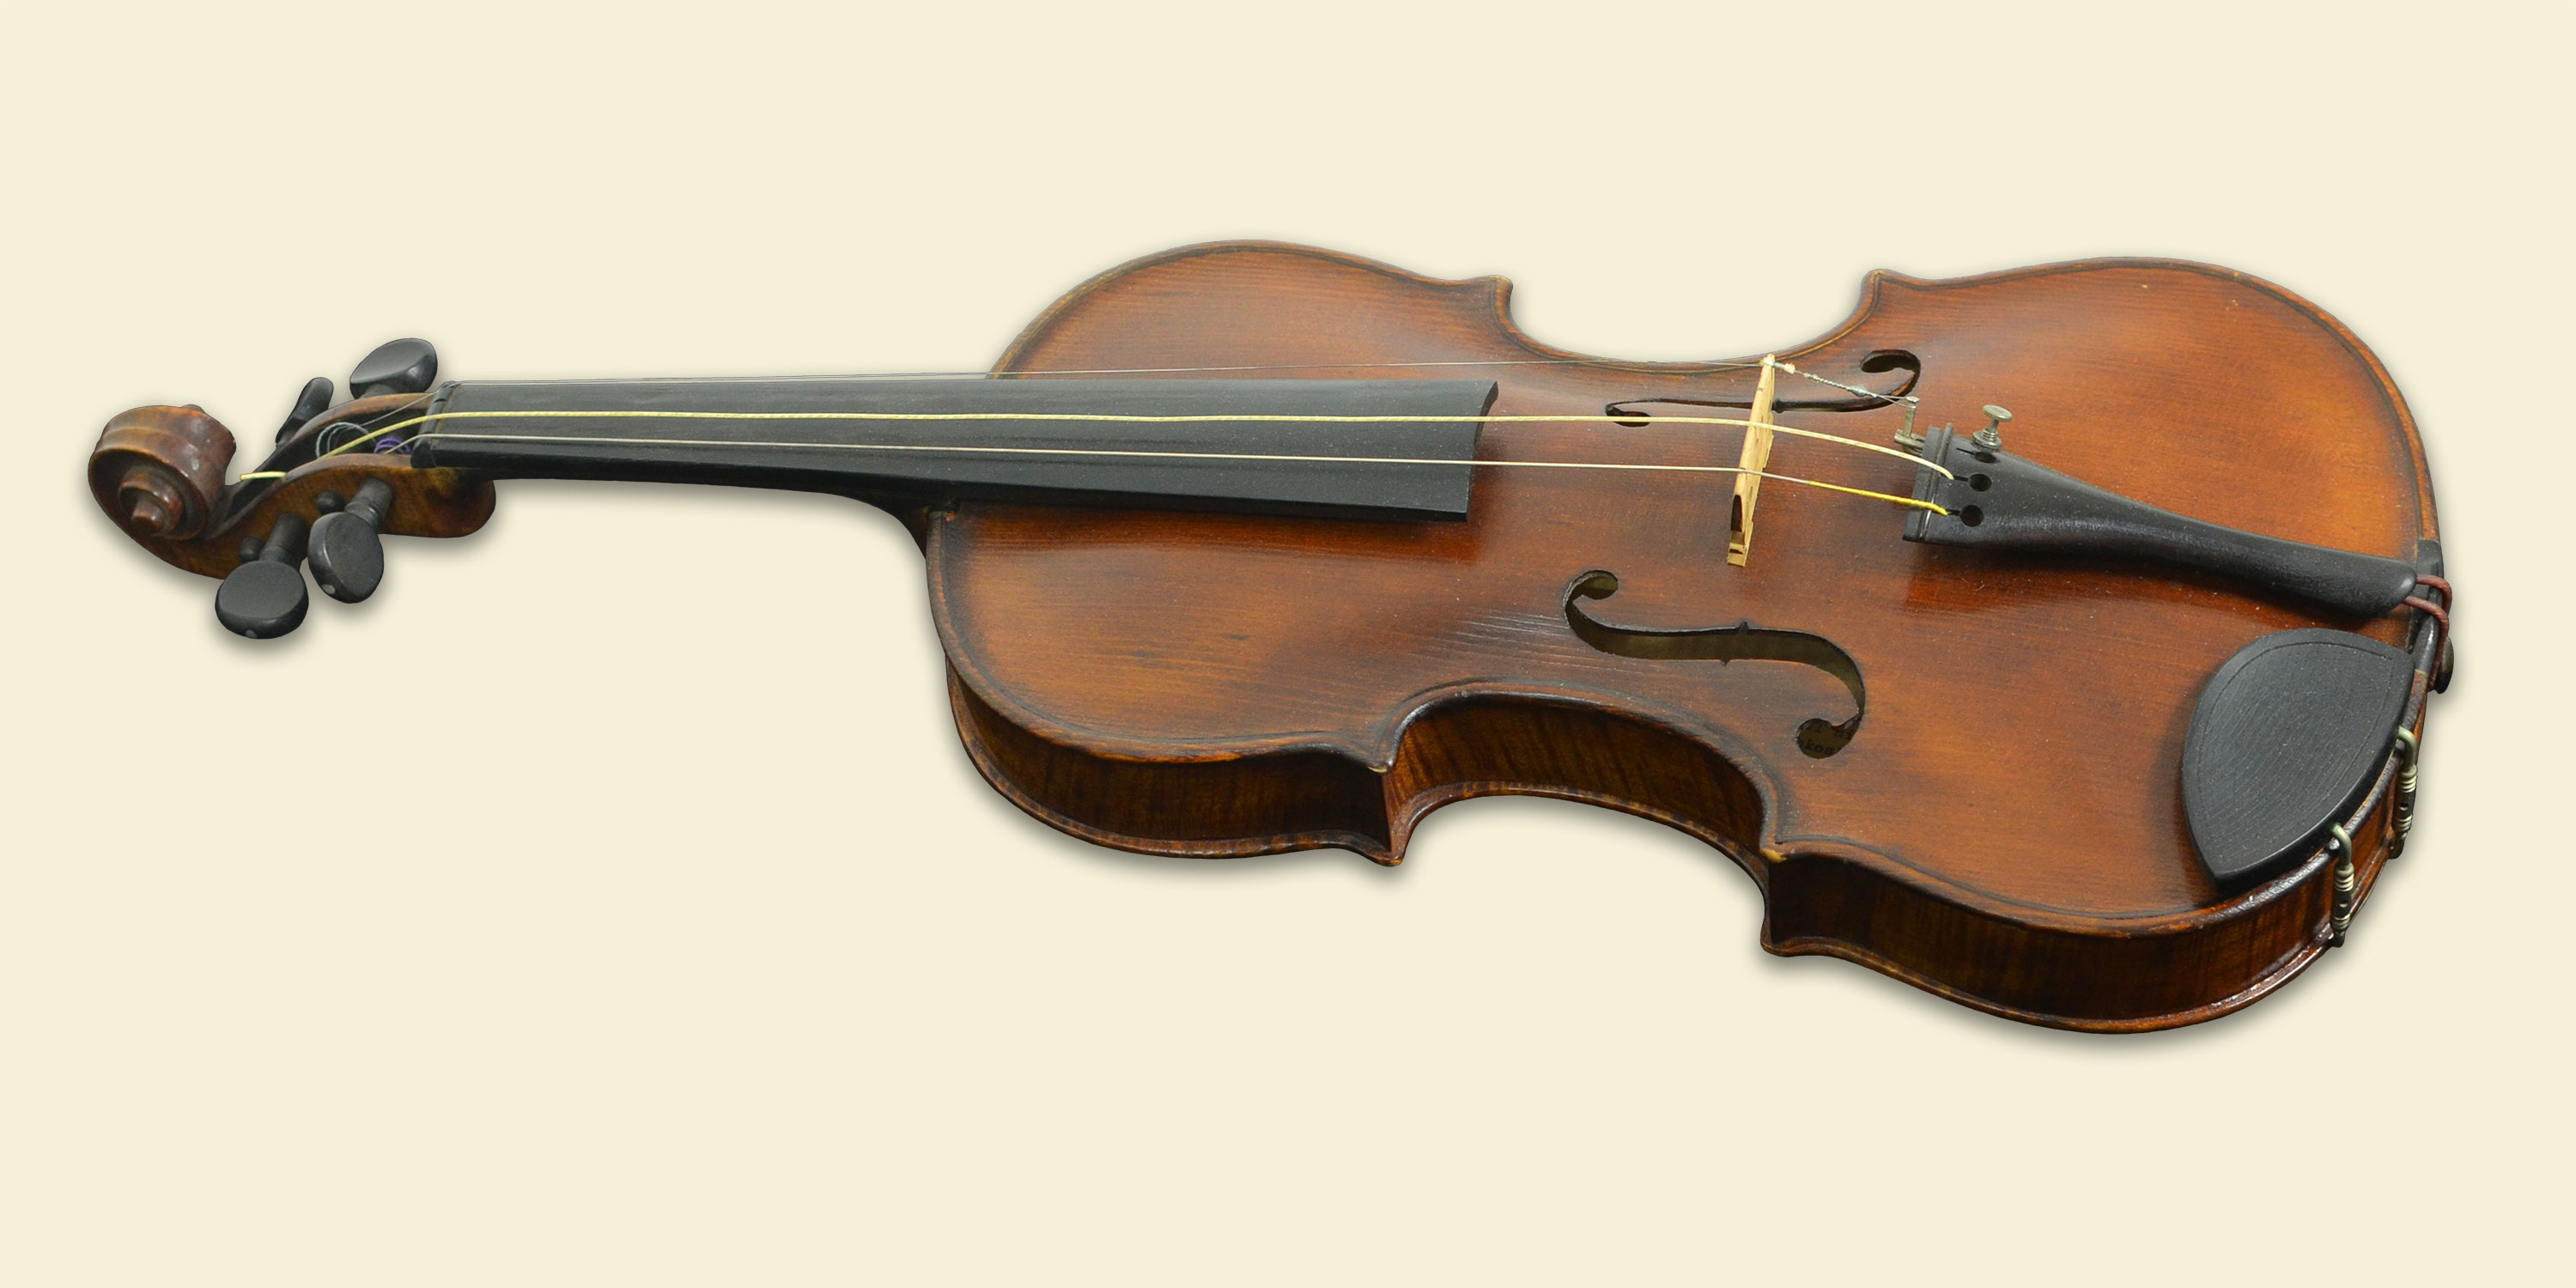 Historic violin